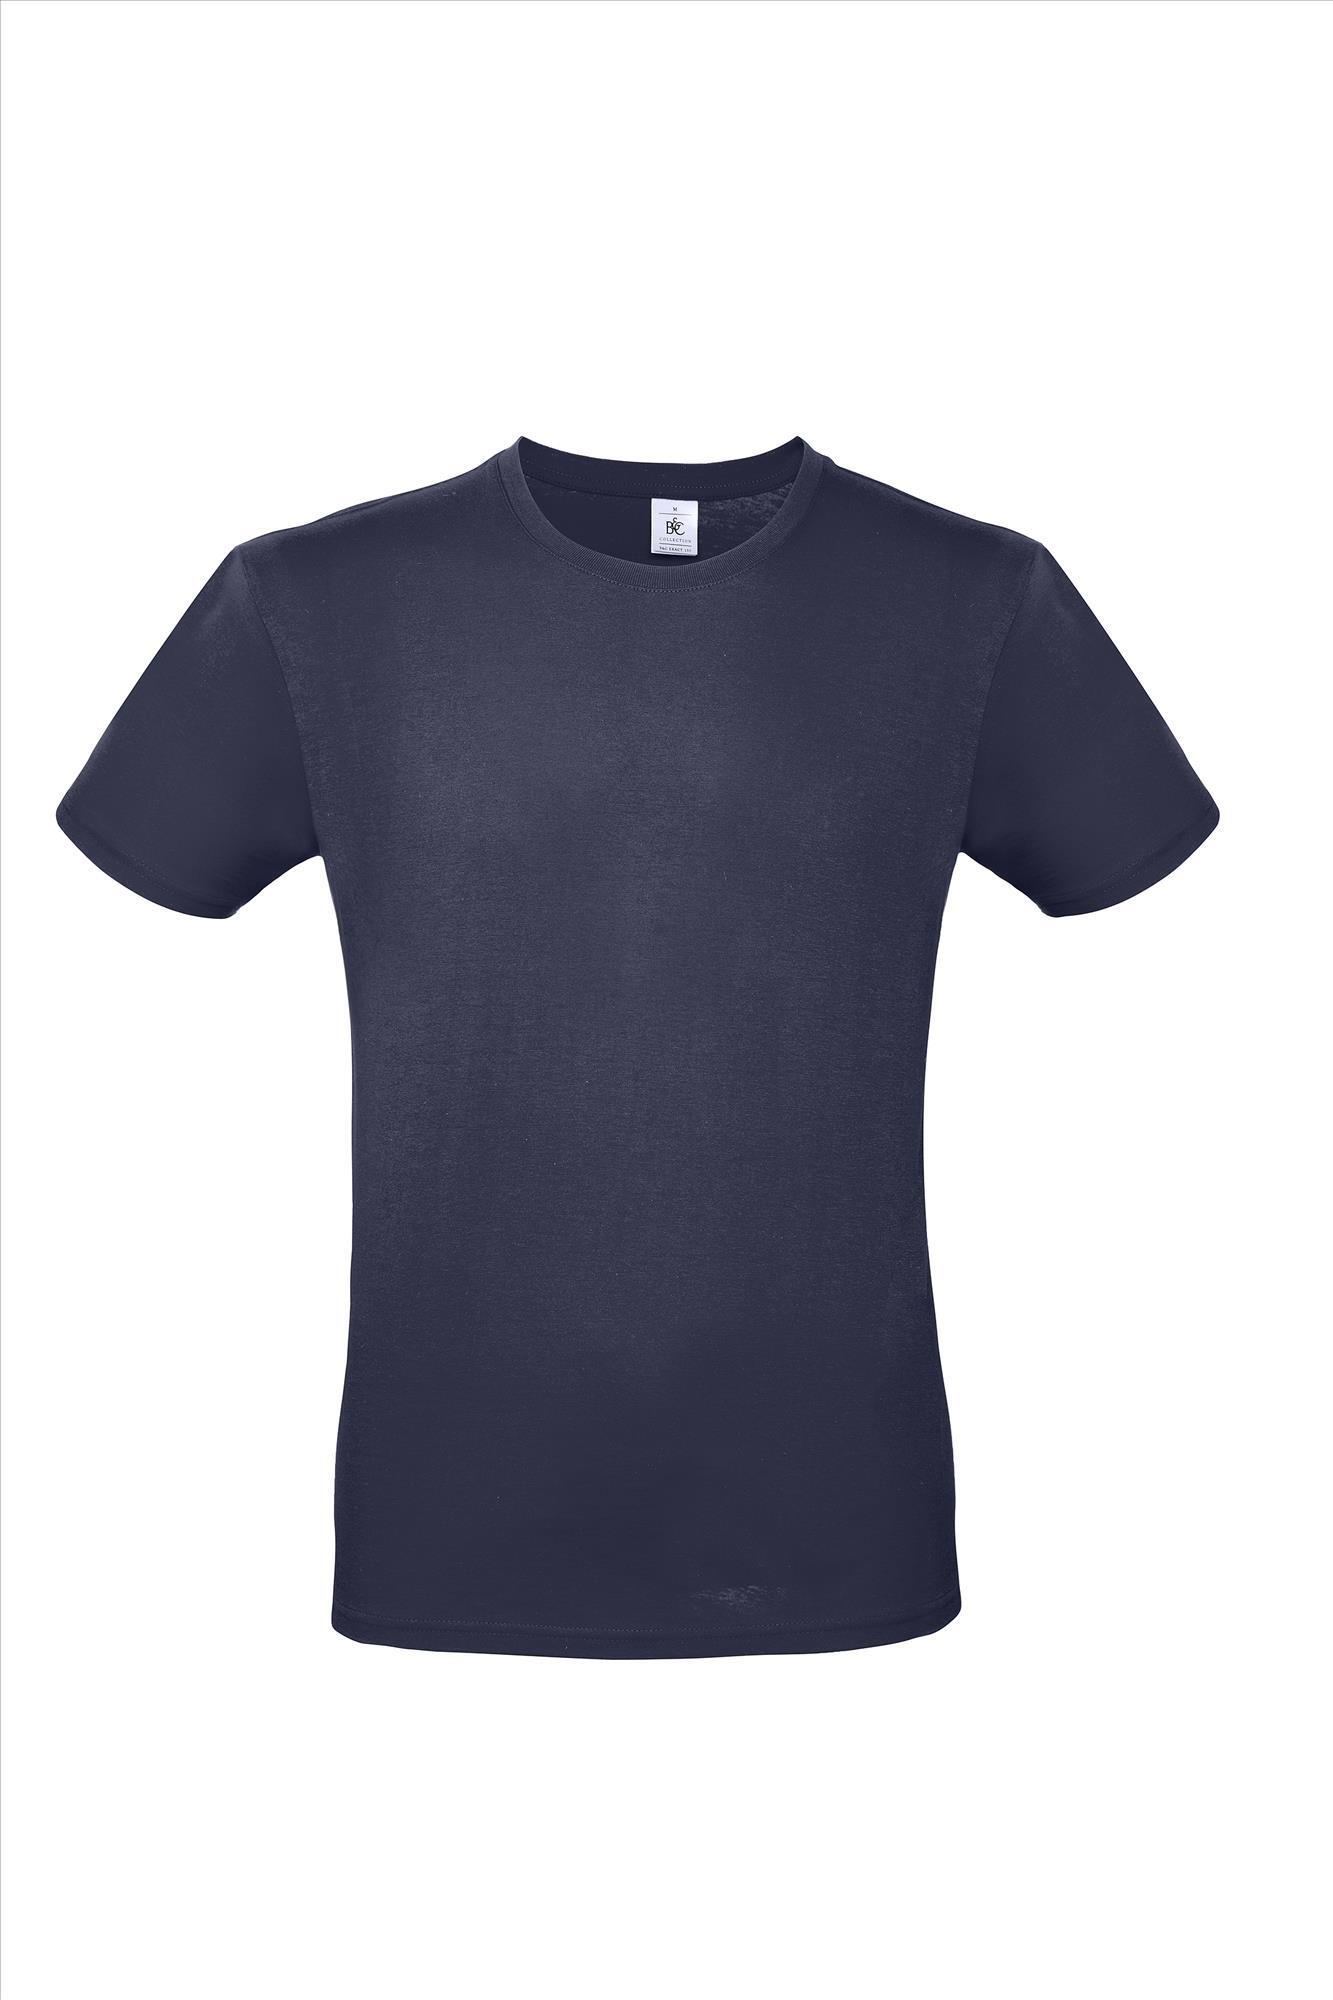 Modern T-shirt voor hem fraai heren shirt urban donkerblauw